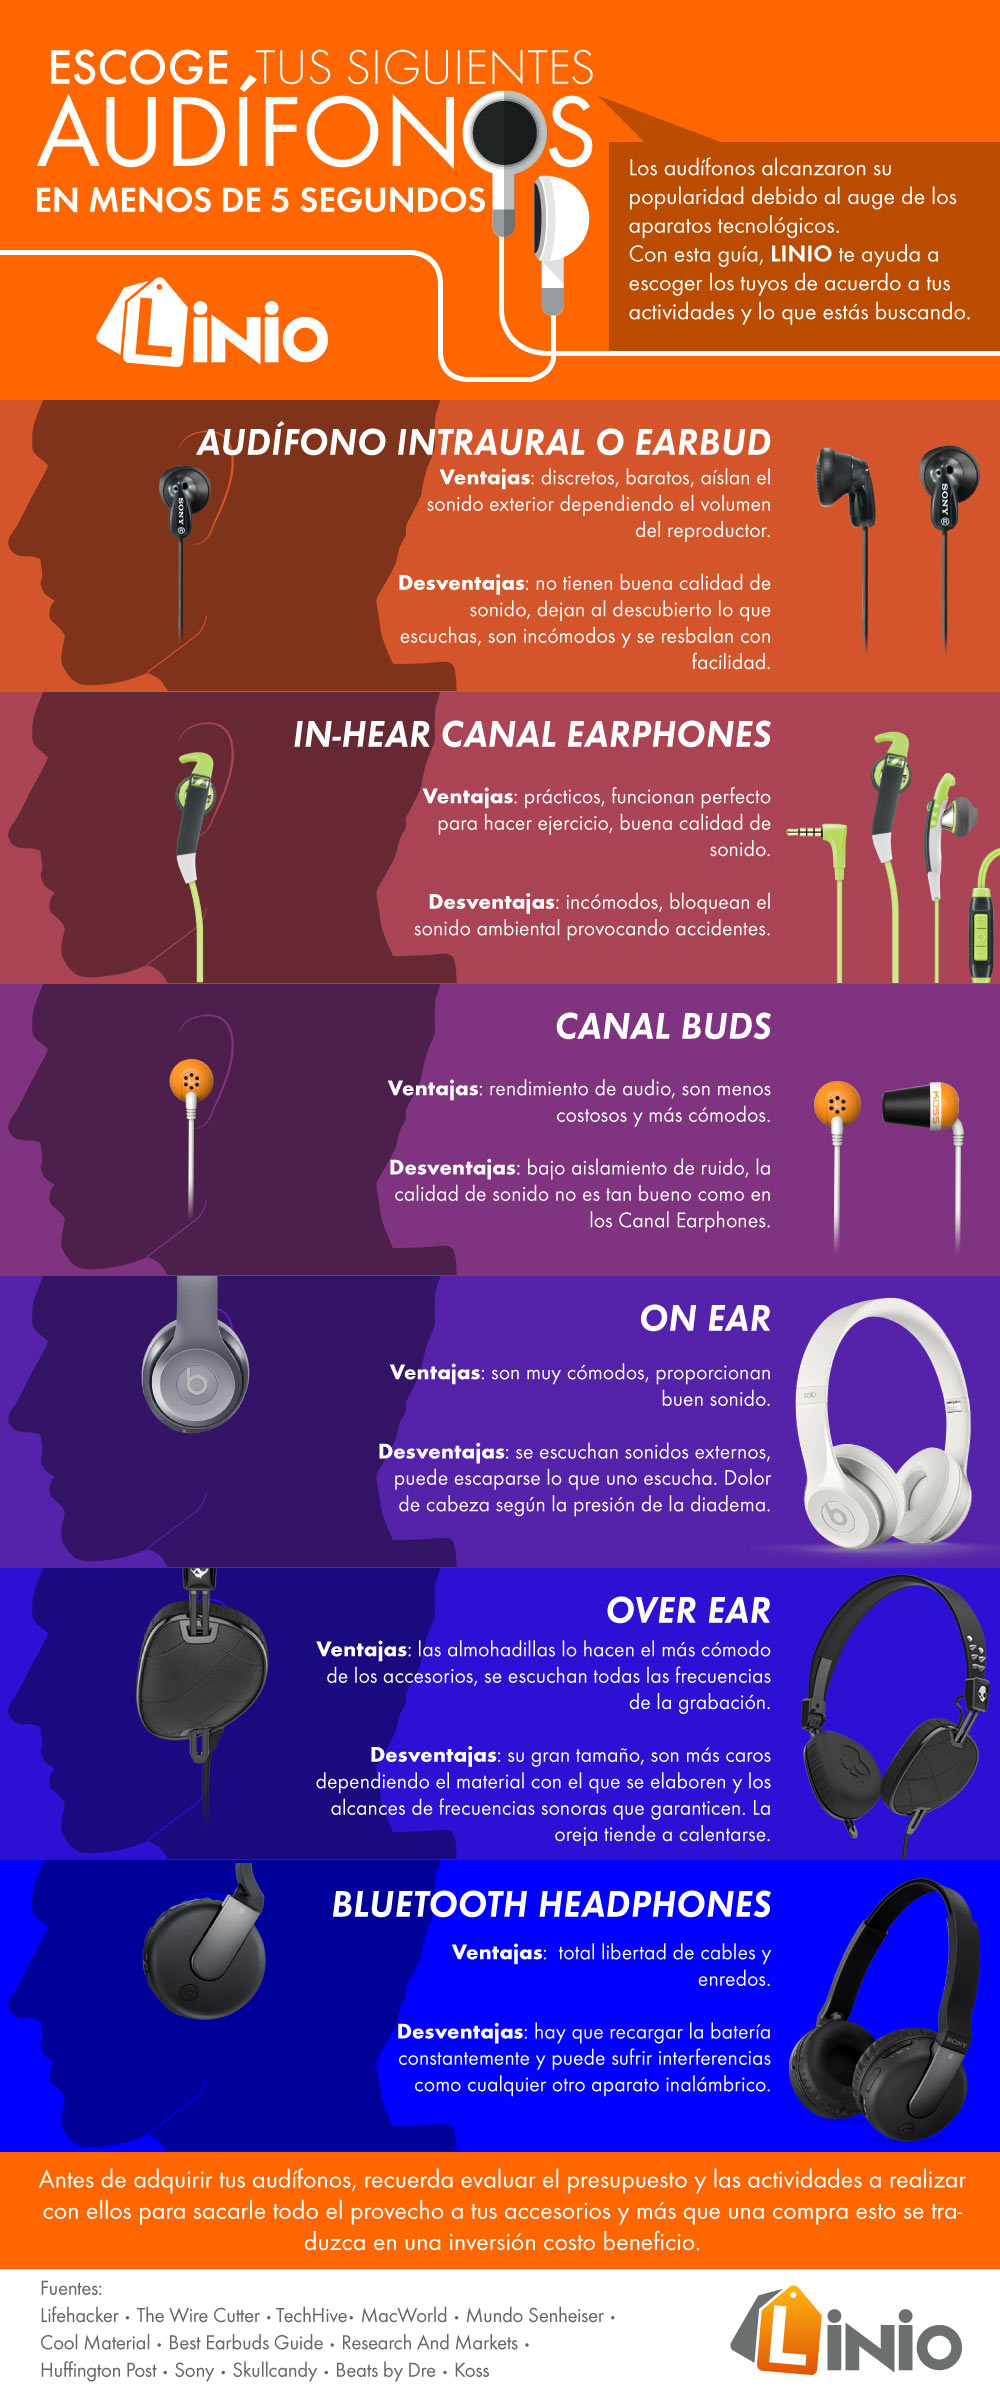 Escoge tus audífonos